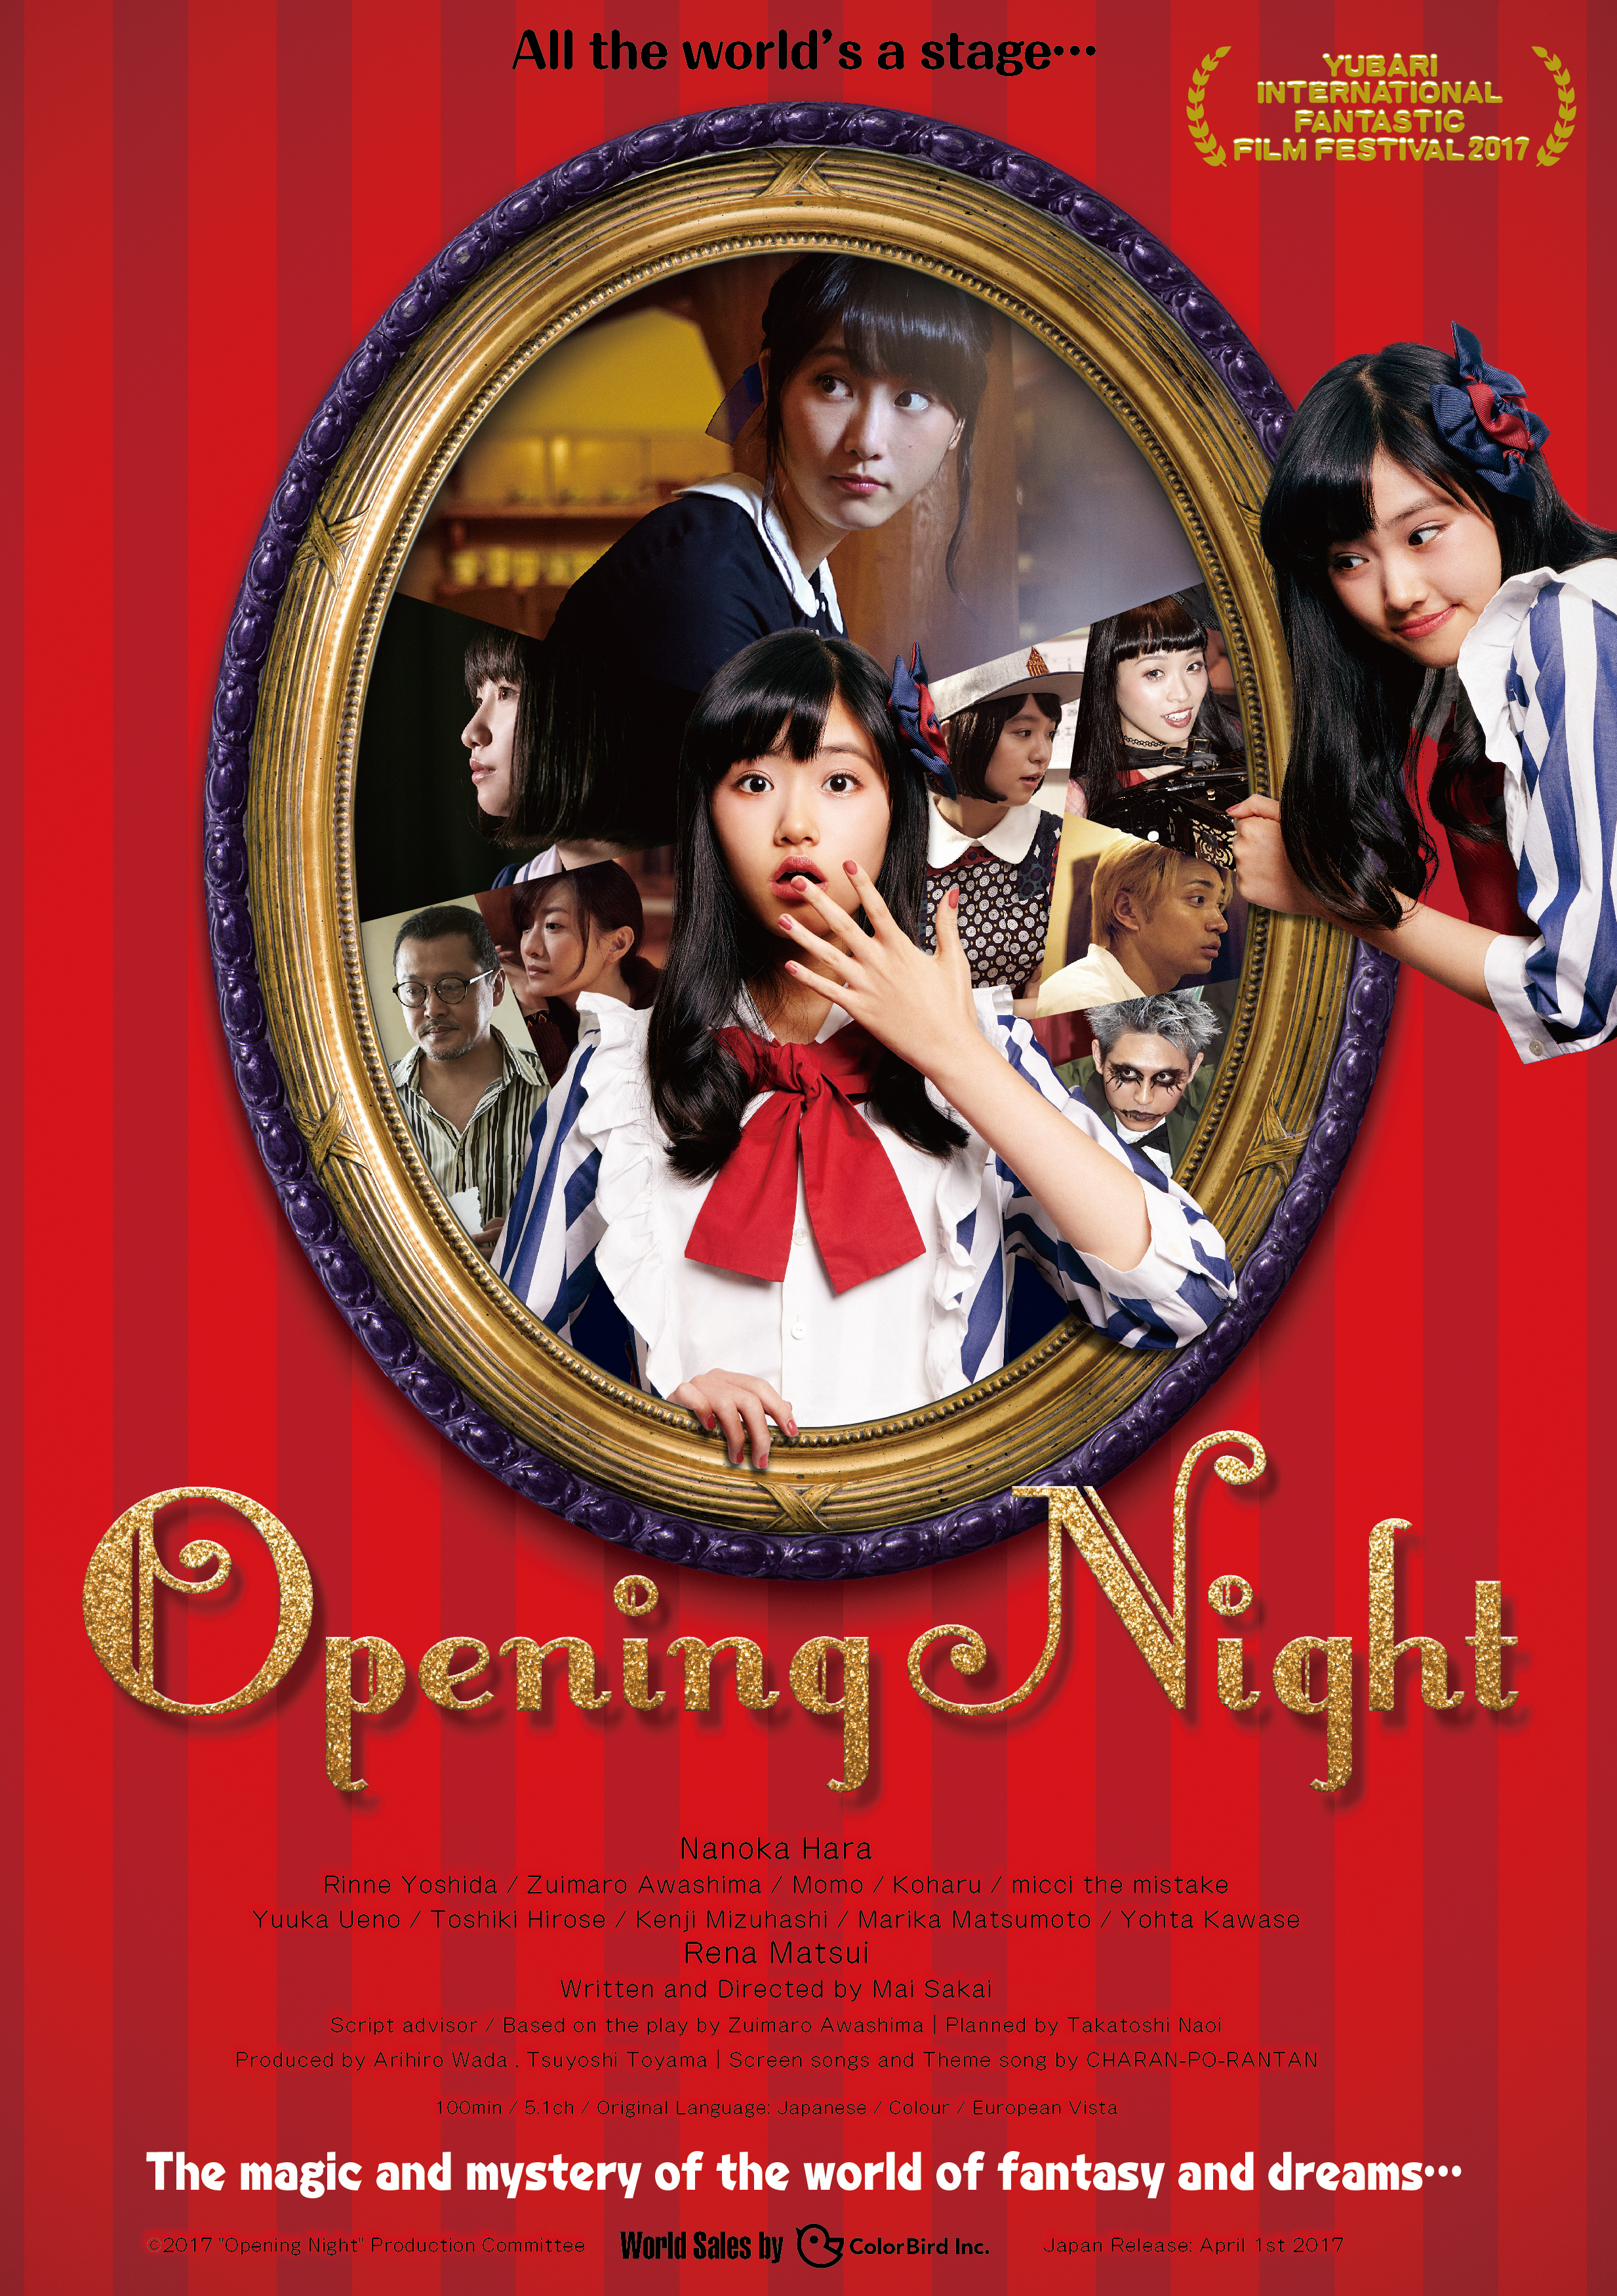 Nonton film Opening Night layarkaca21 indoxx1 ganool online streaming terbaru